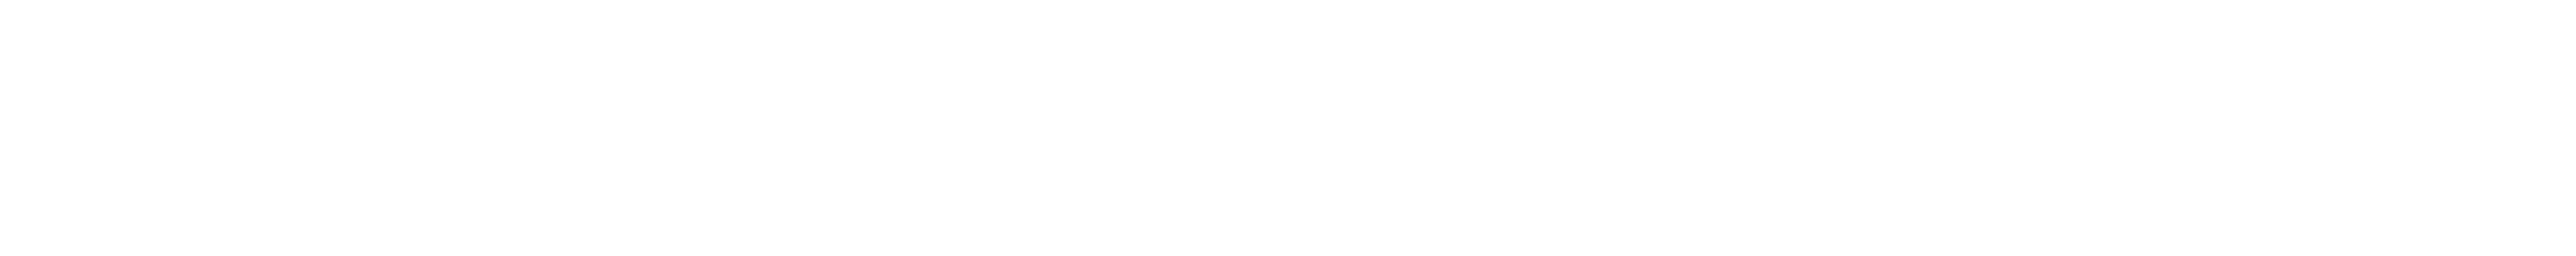 Bowers&Wilkins Logo